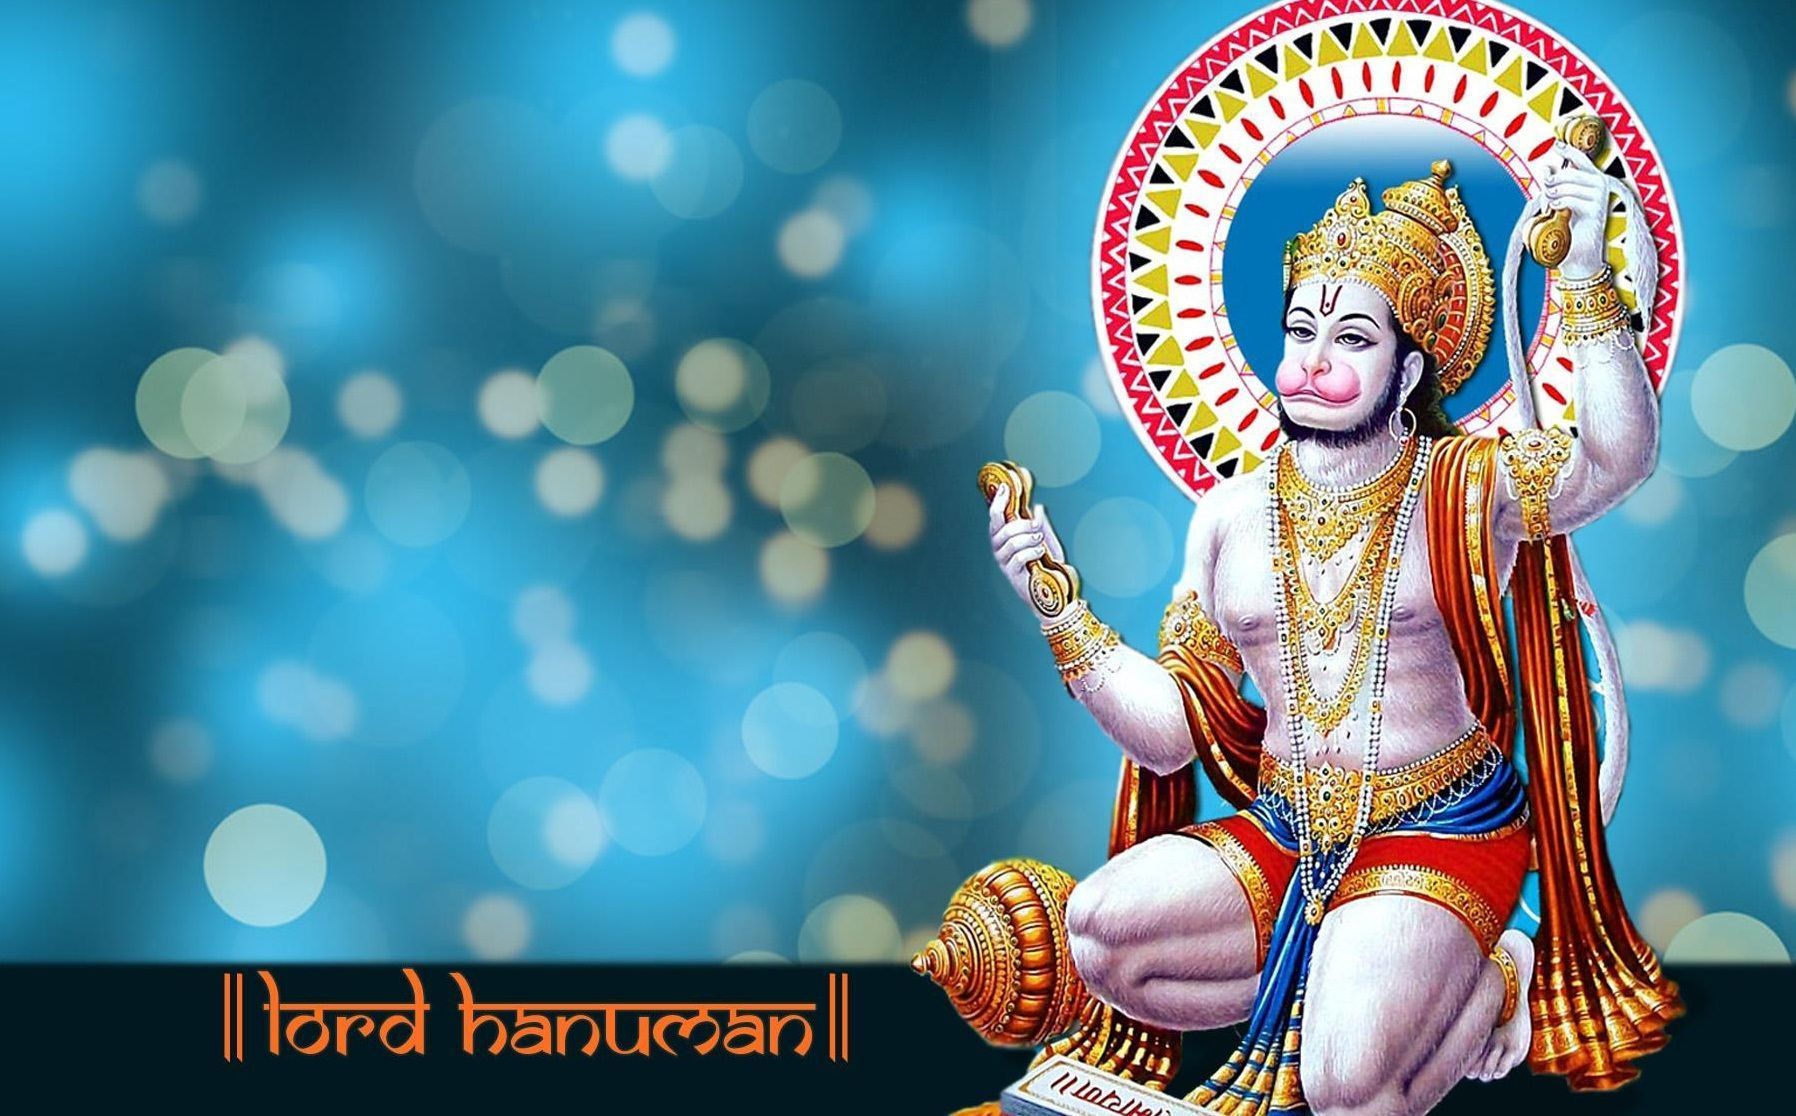 Hindu God Wallpapers for Mobile Phones, God hd Wallpapers for Mobile